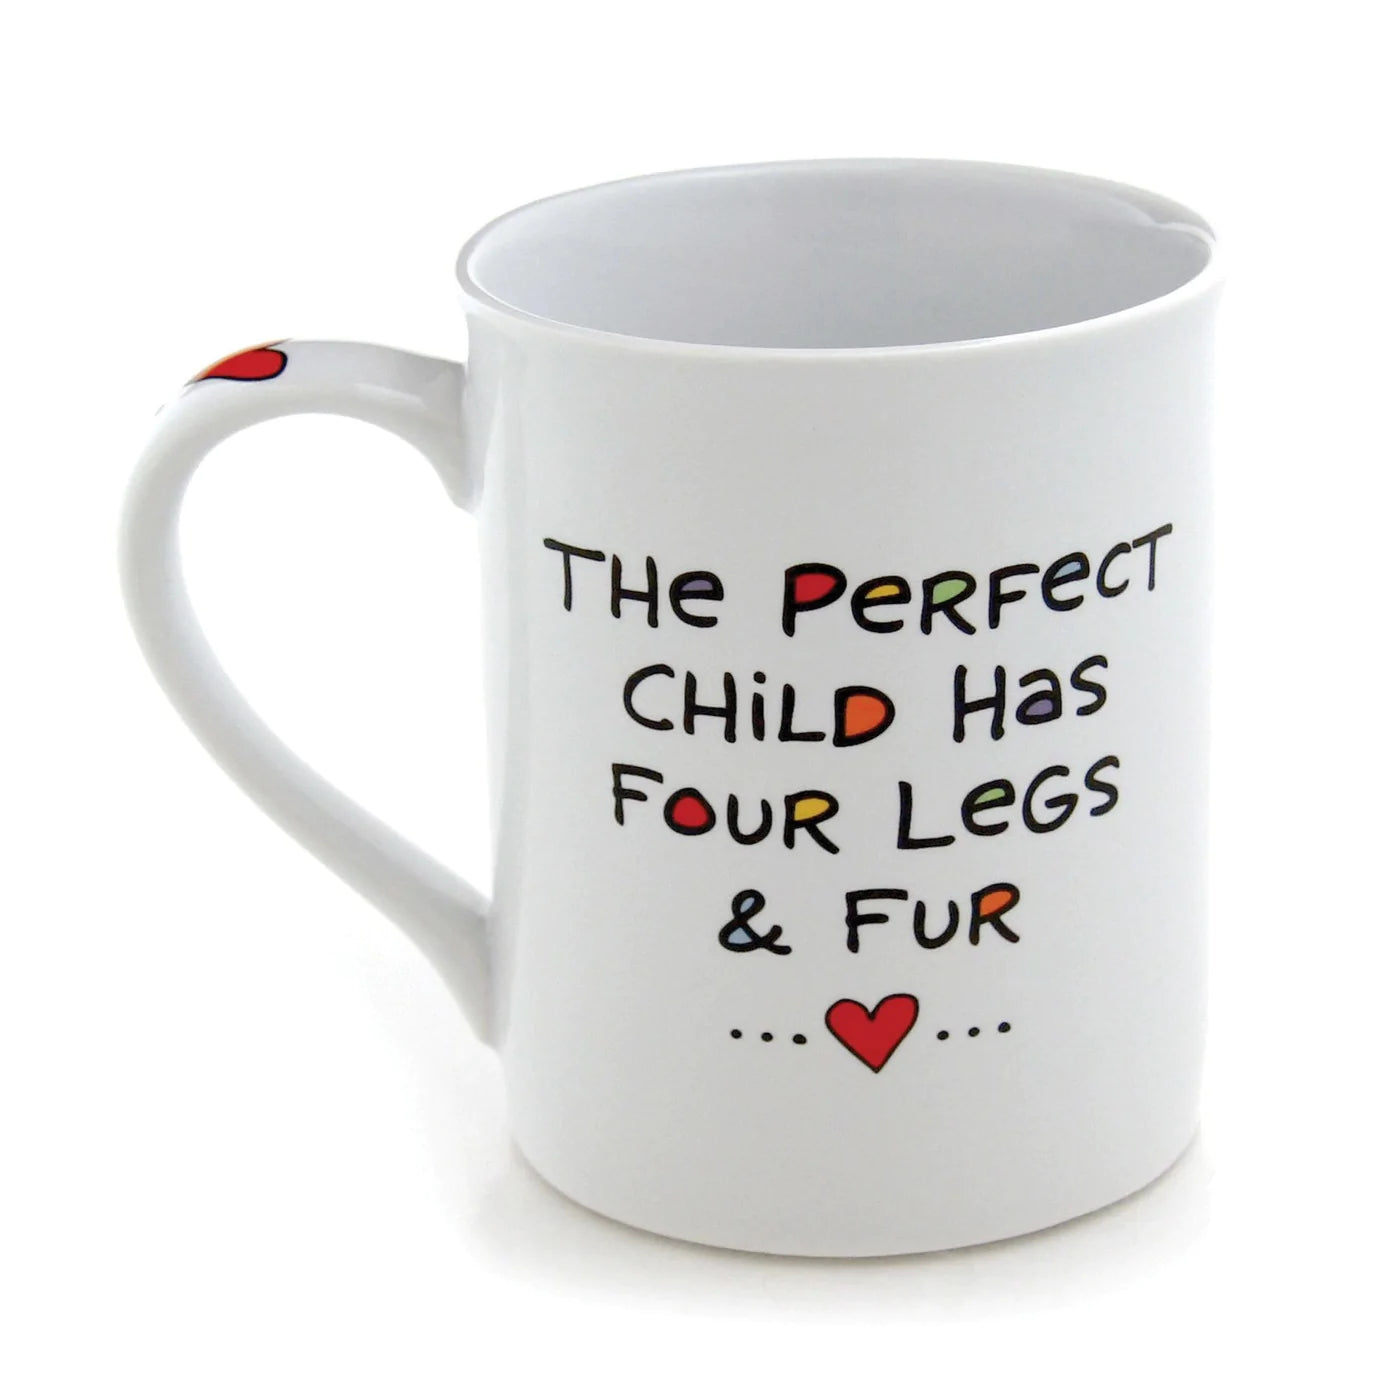 The Perfect Child Has Four Legs & Fur Mug